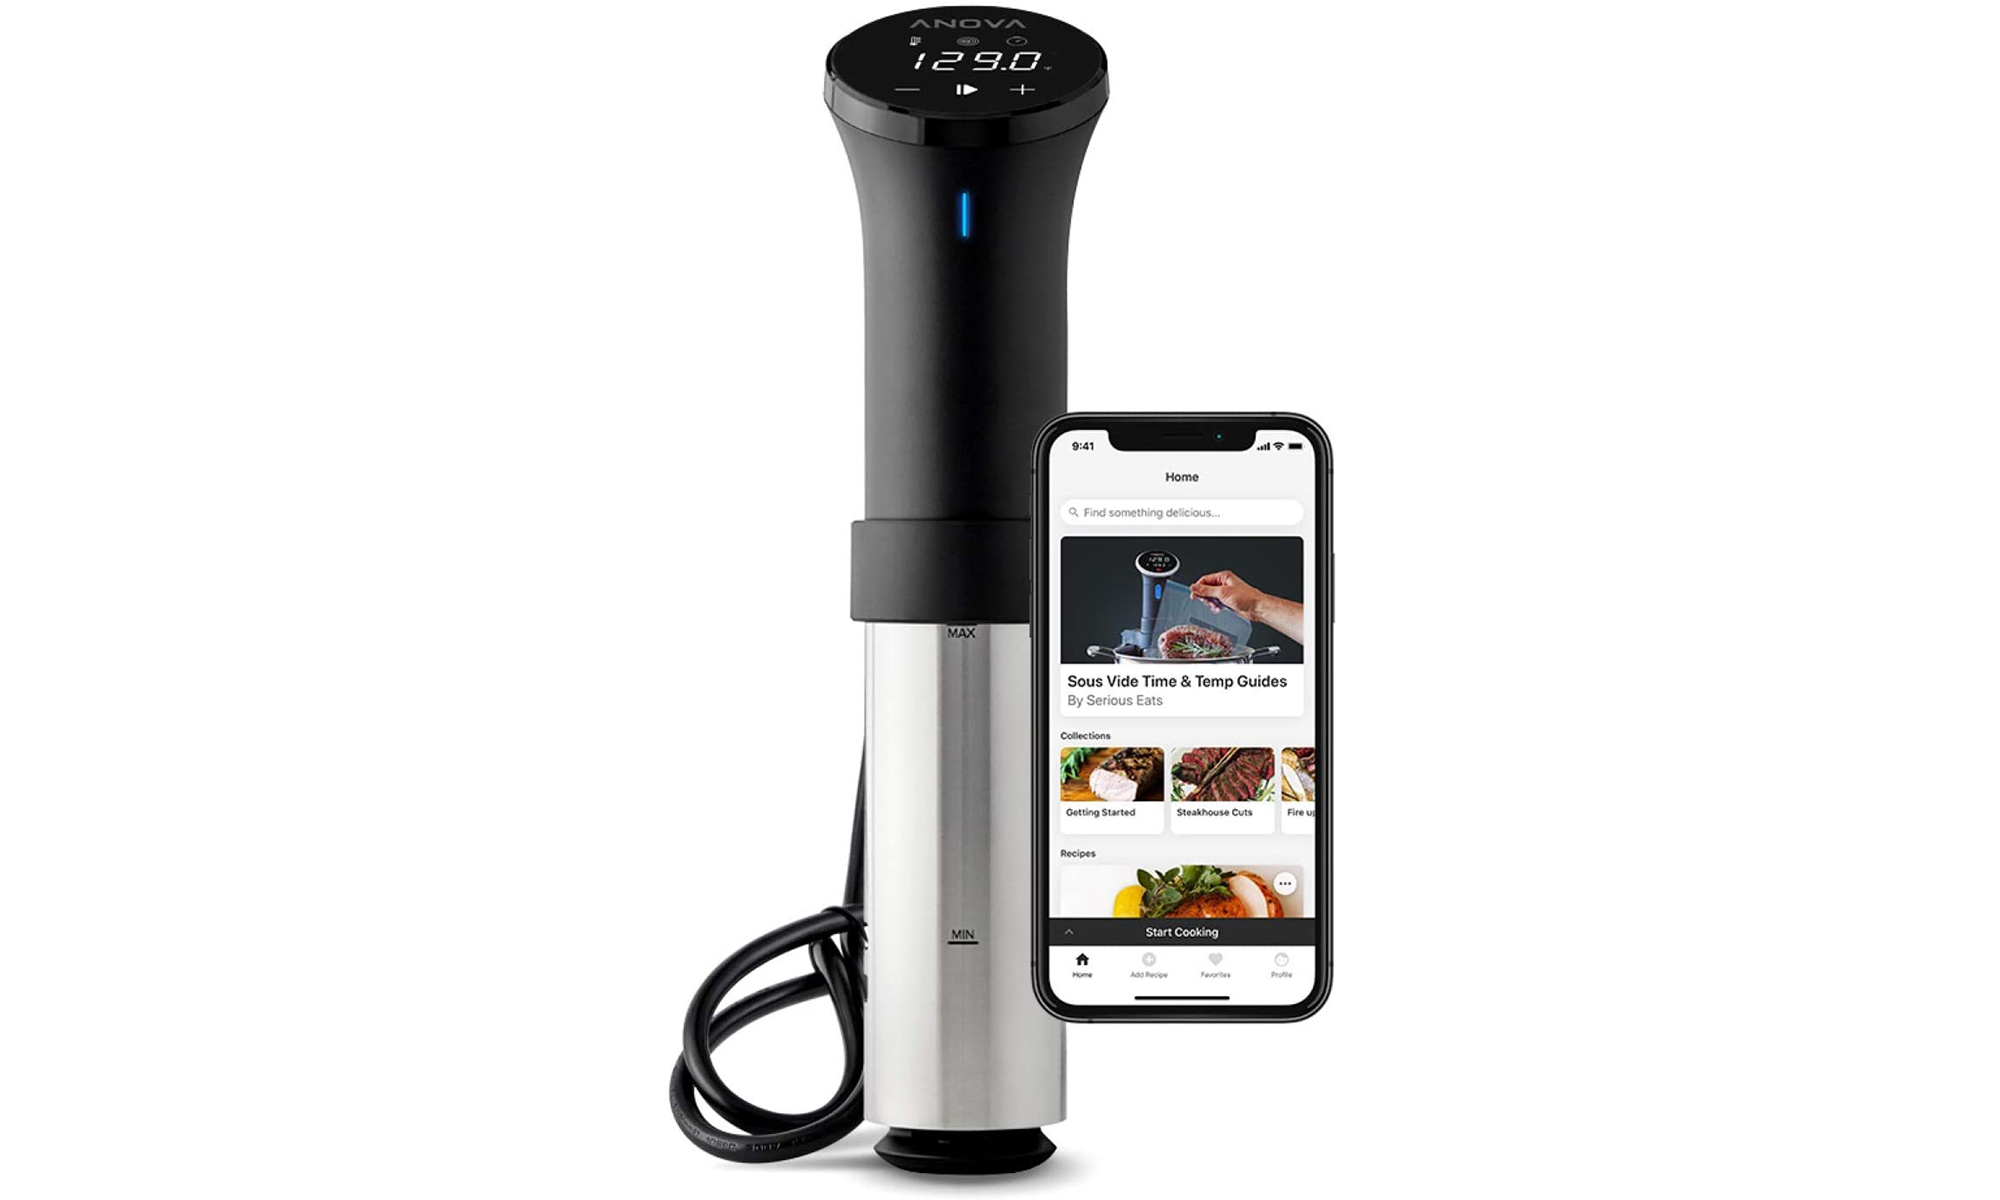 Amazon giảm giá 80 đô la cho máy vide Sous Precision Cooker của Anova